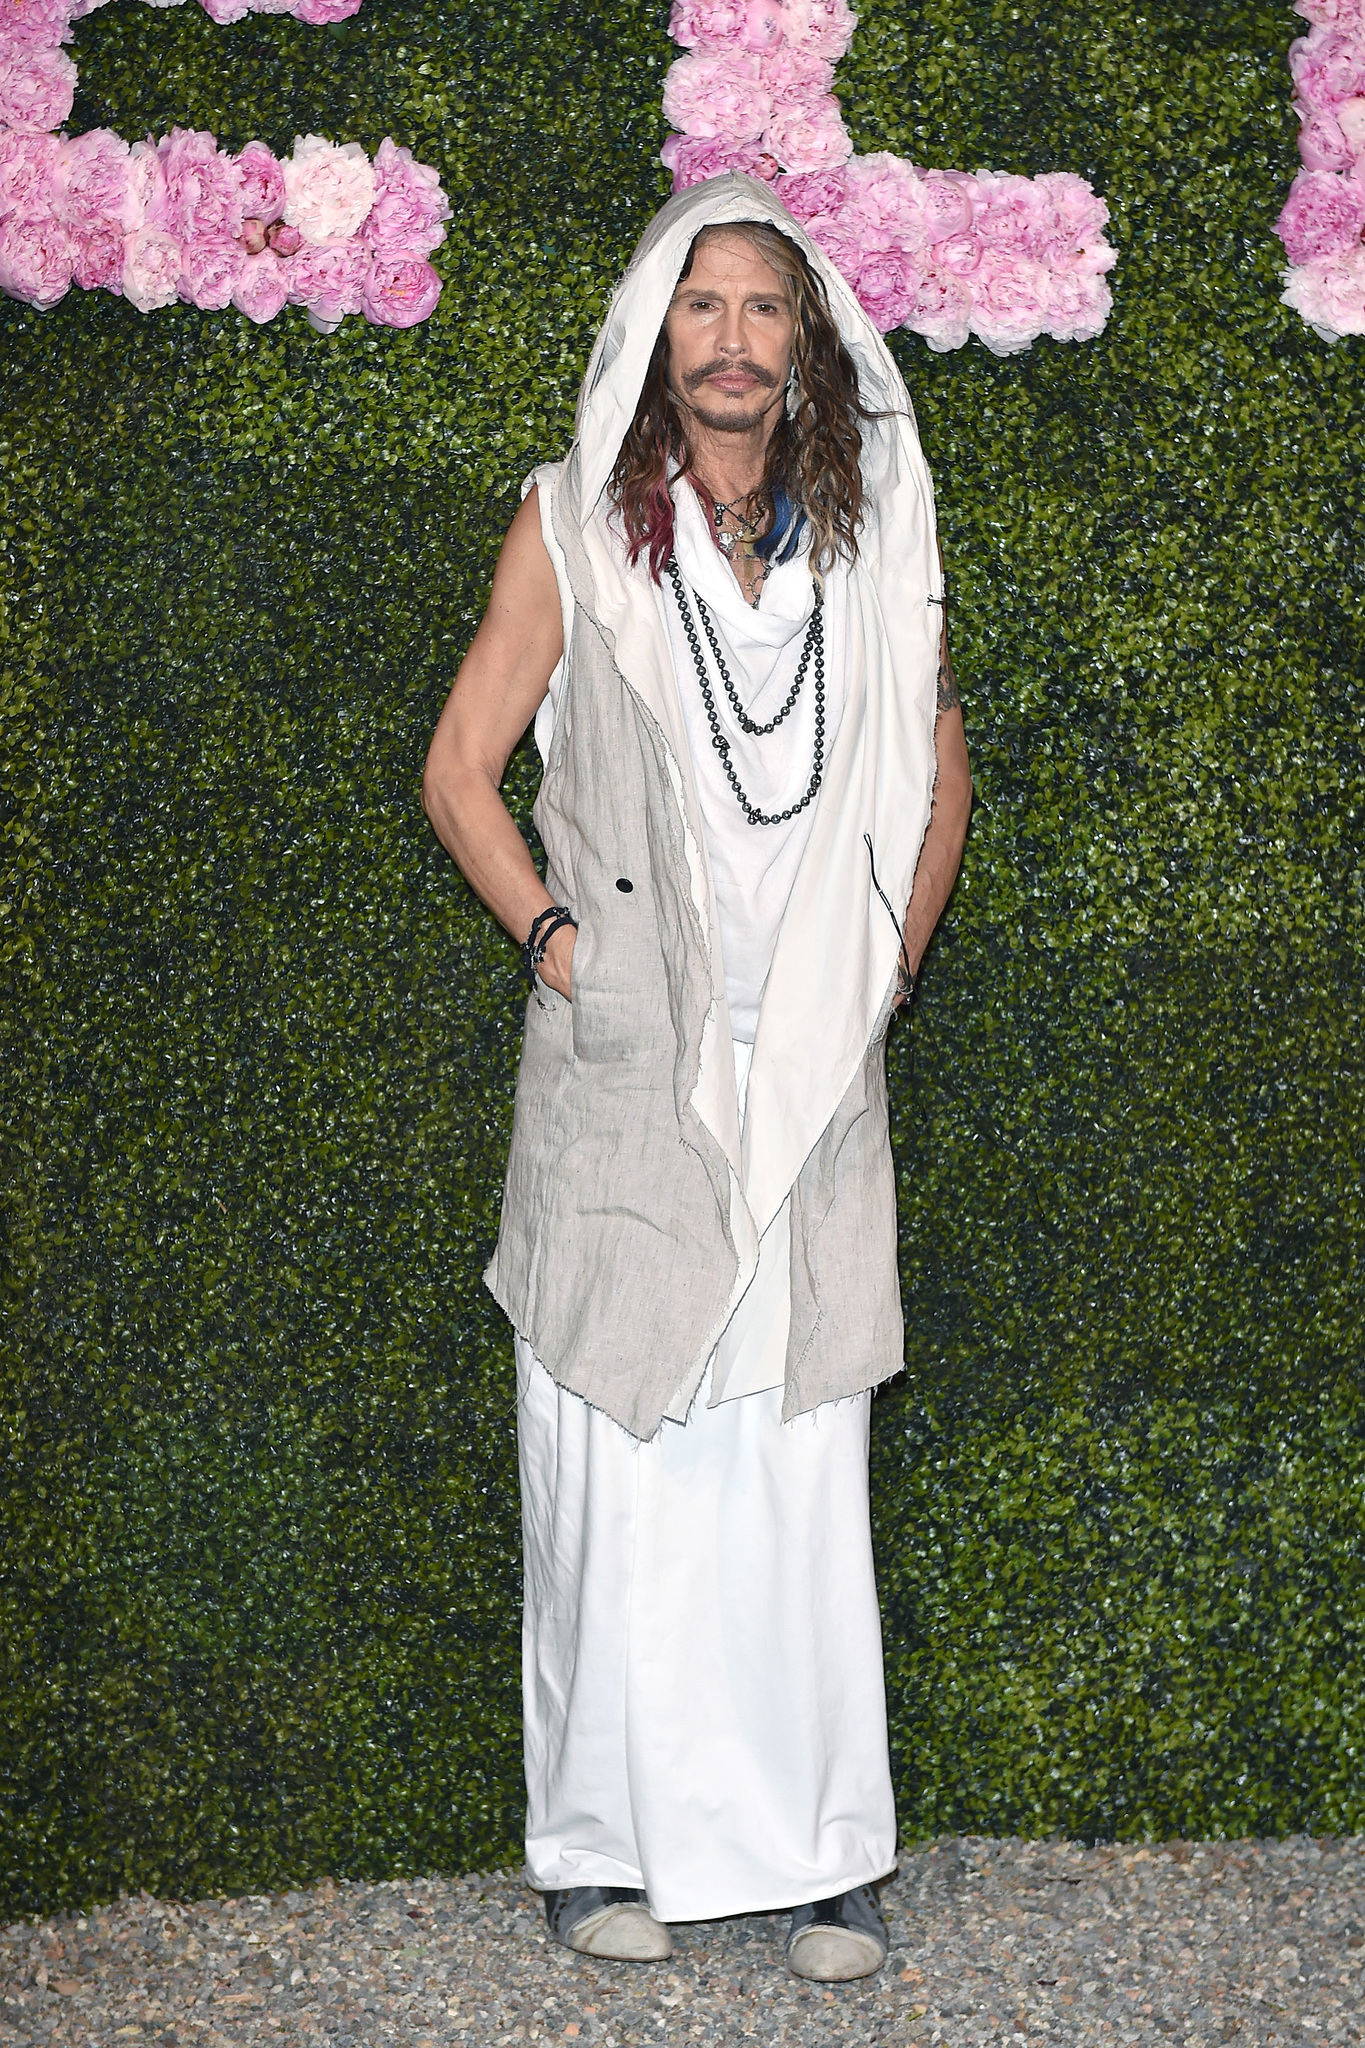 Steven Tyler attends the Stella McCartney Garden Party during the Milan Fashion Week Menswear Spring/Summer 2015 on June 23, 2014 in Milan, Italy.